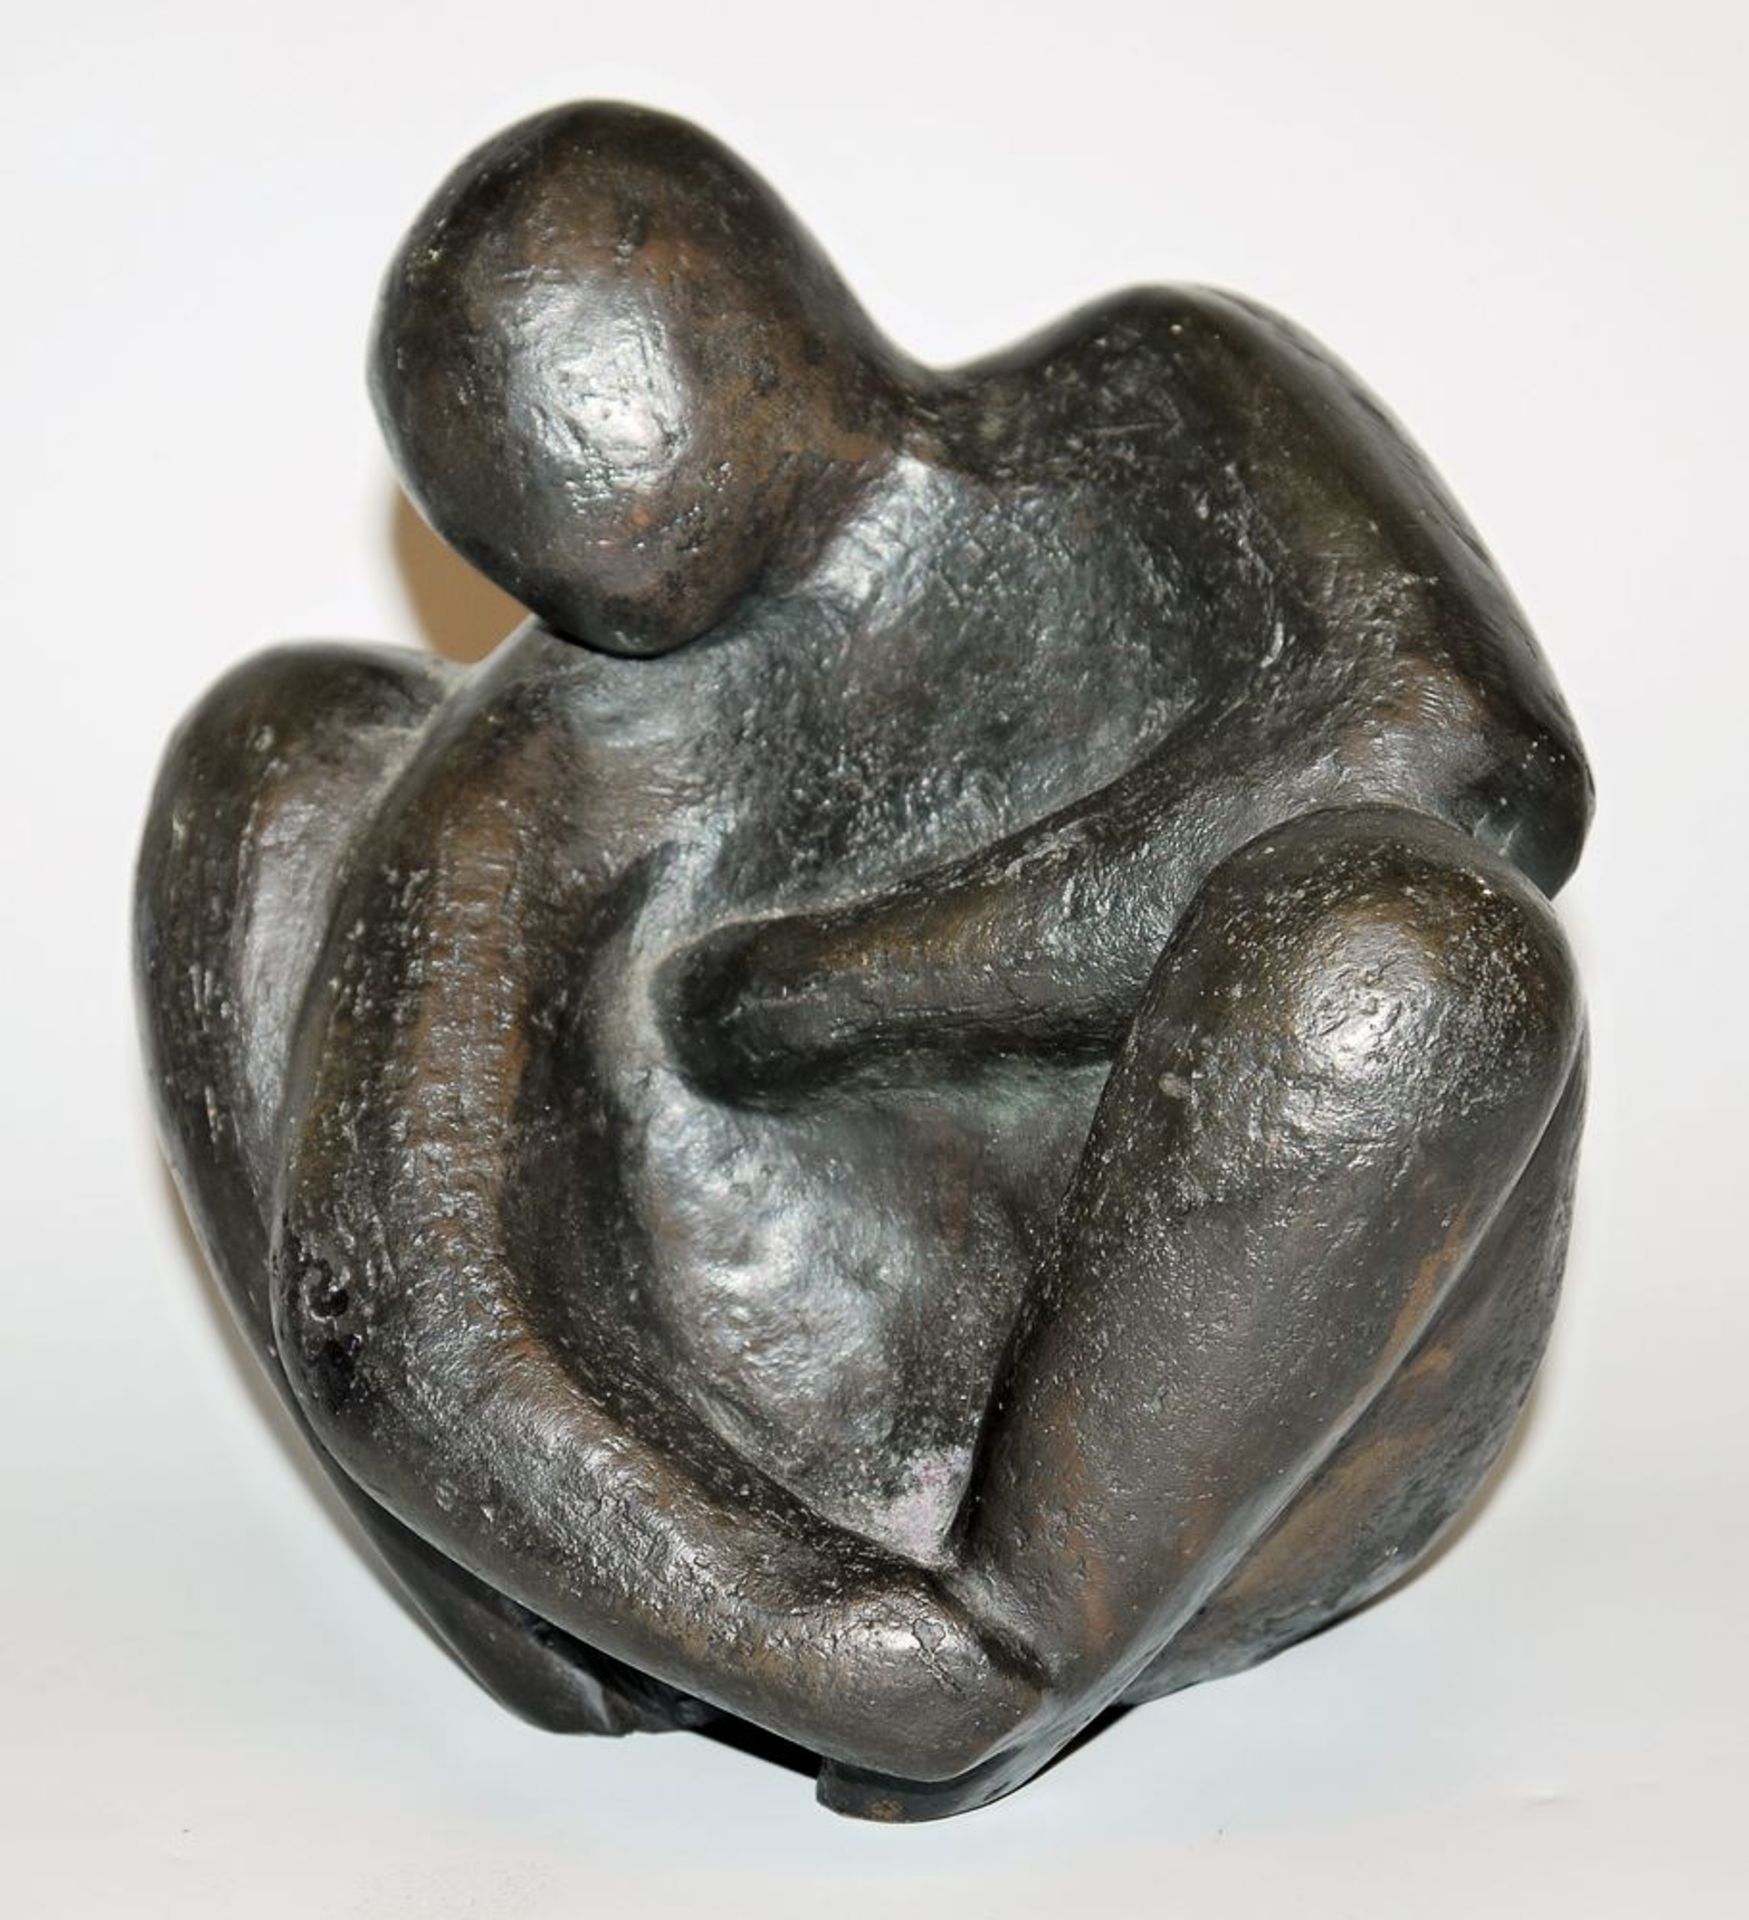 Monogramist EM, Crouching, cubic closed figure, bronze sculpture